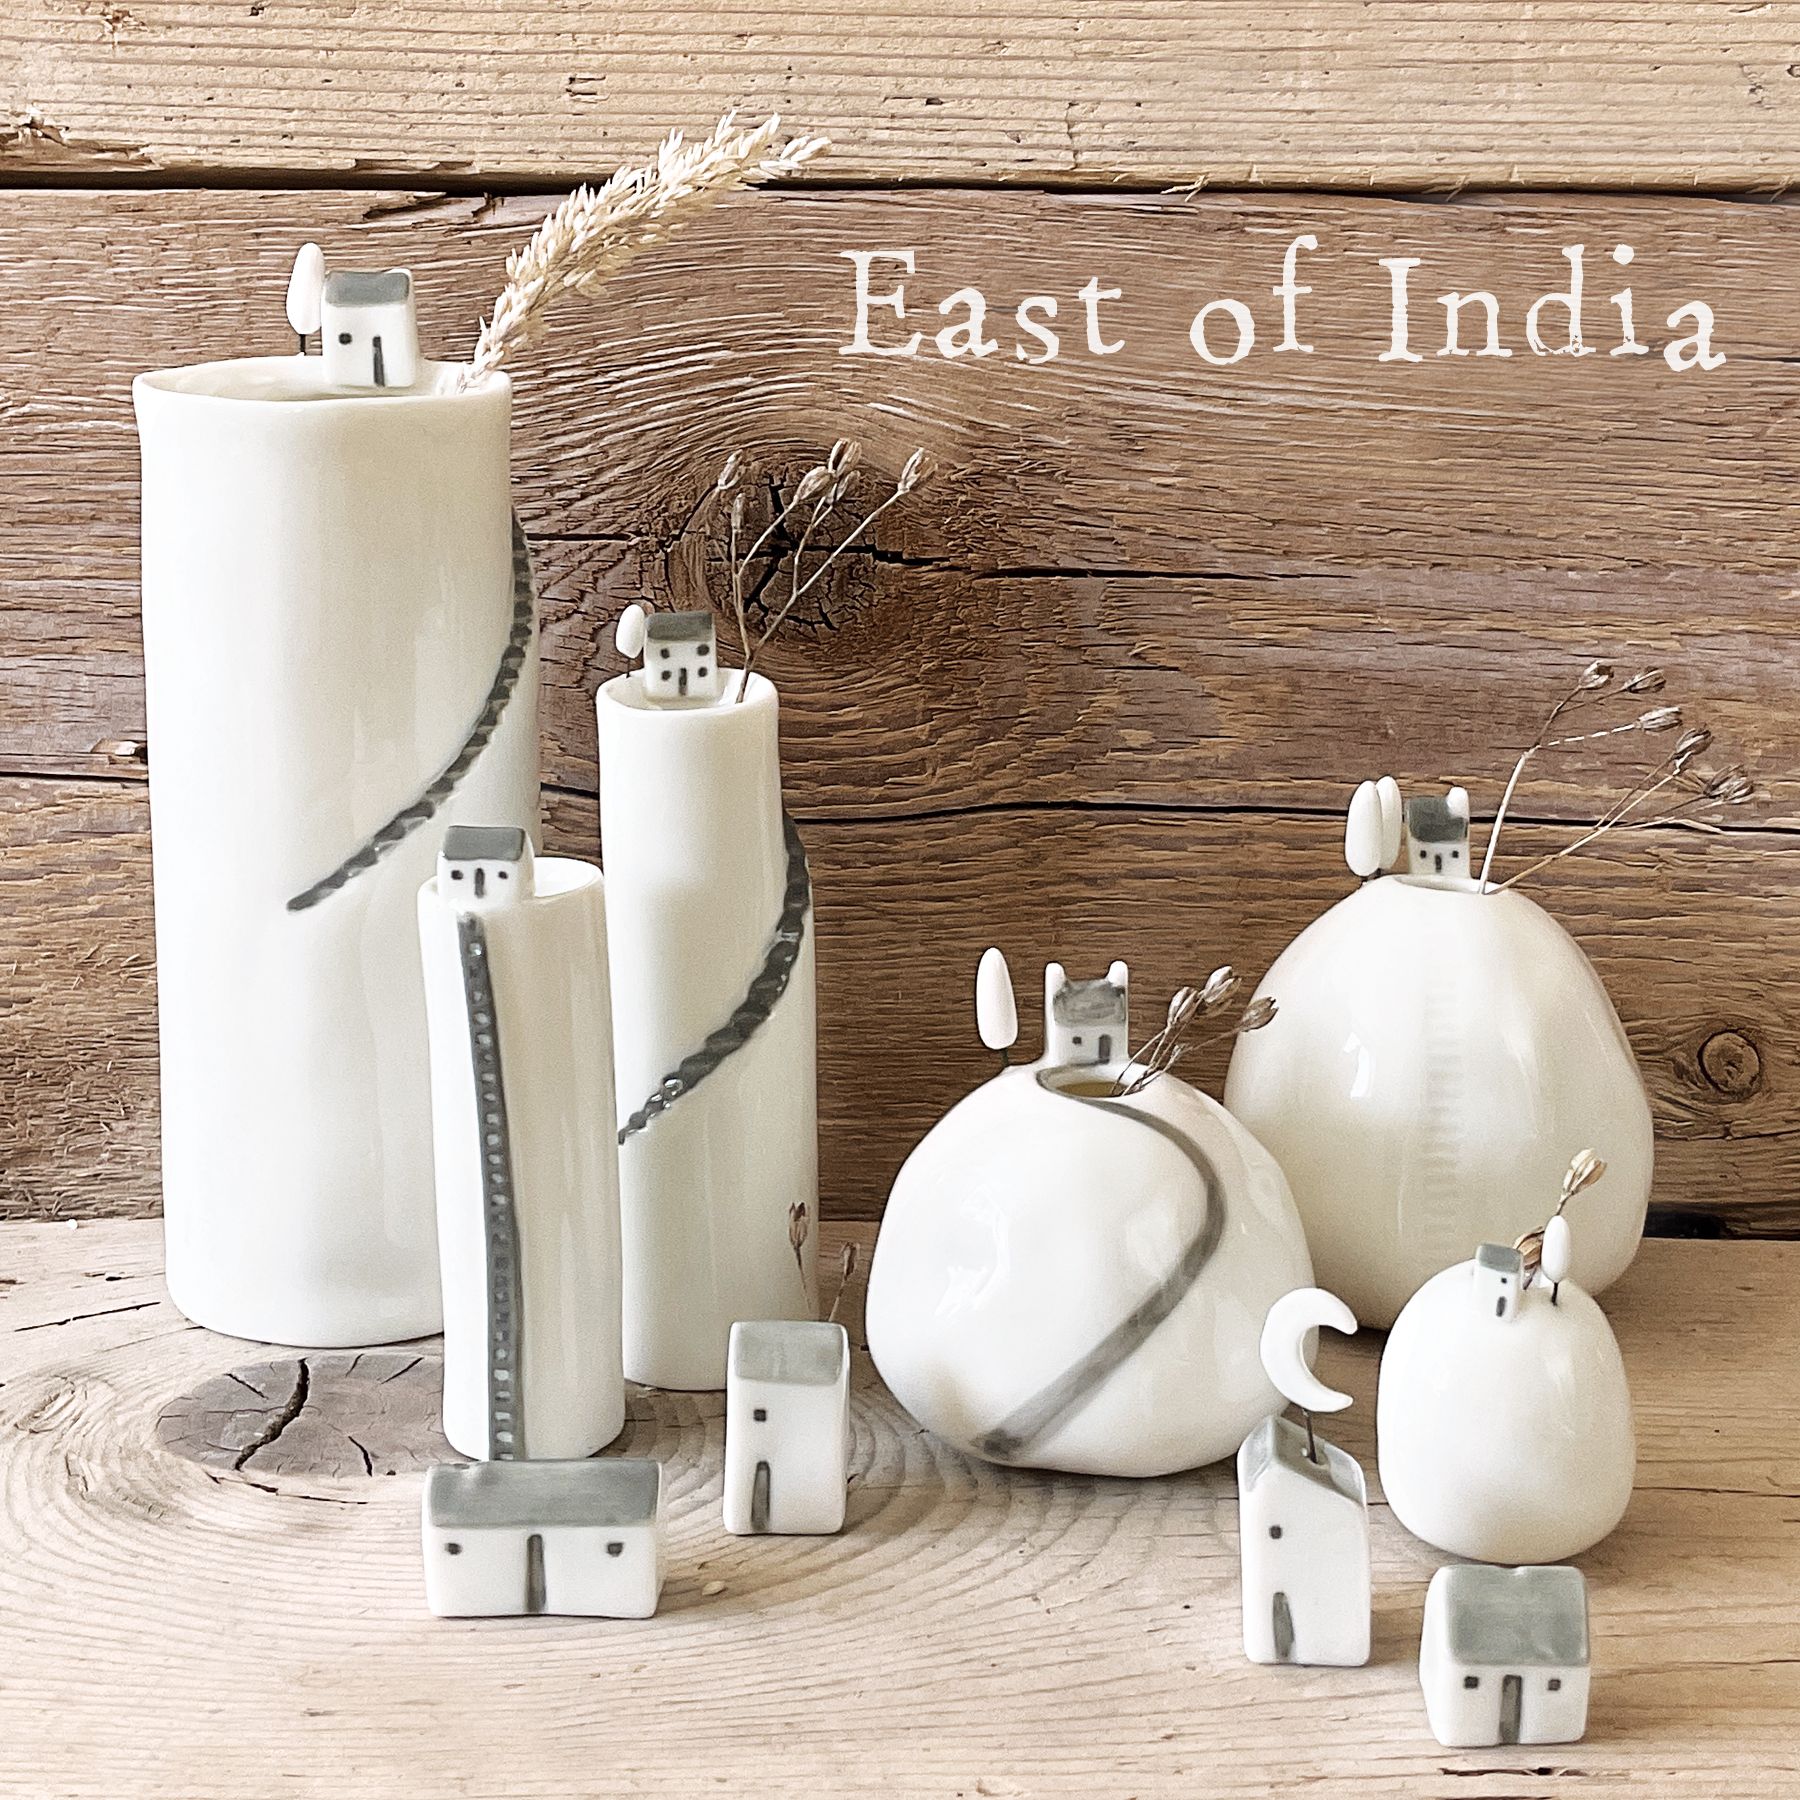 East Of India Ltd